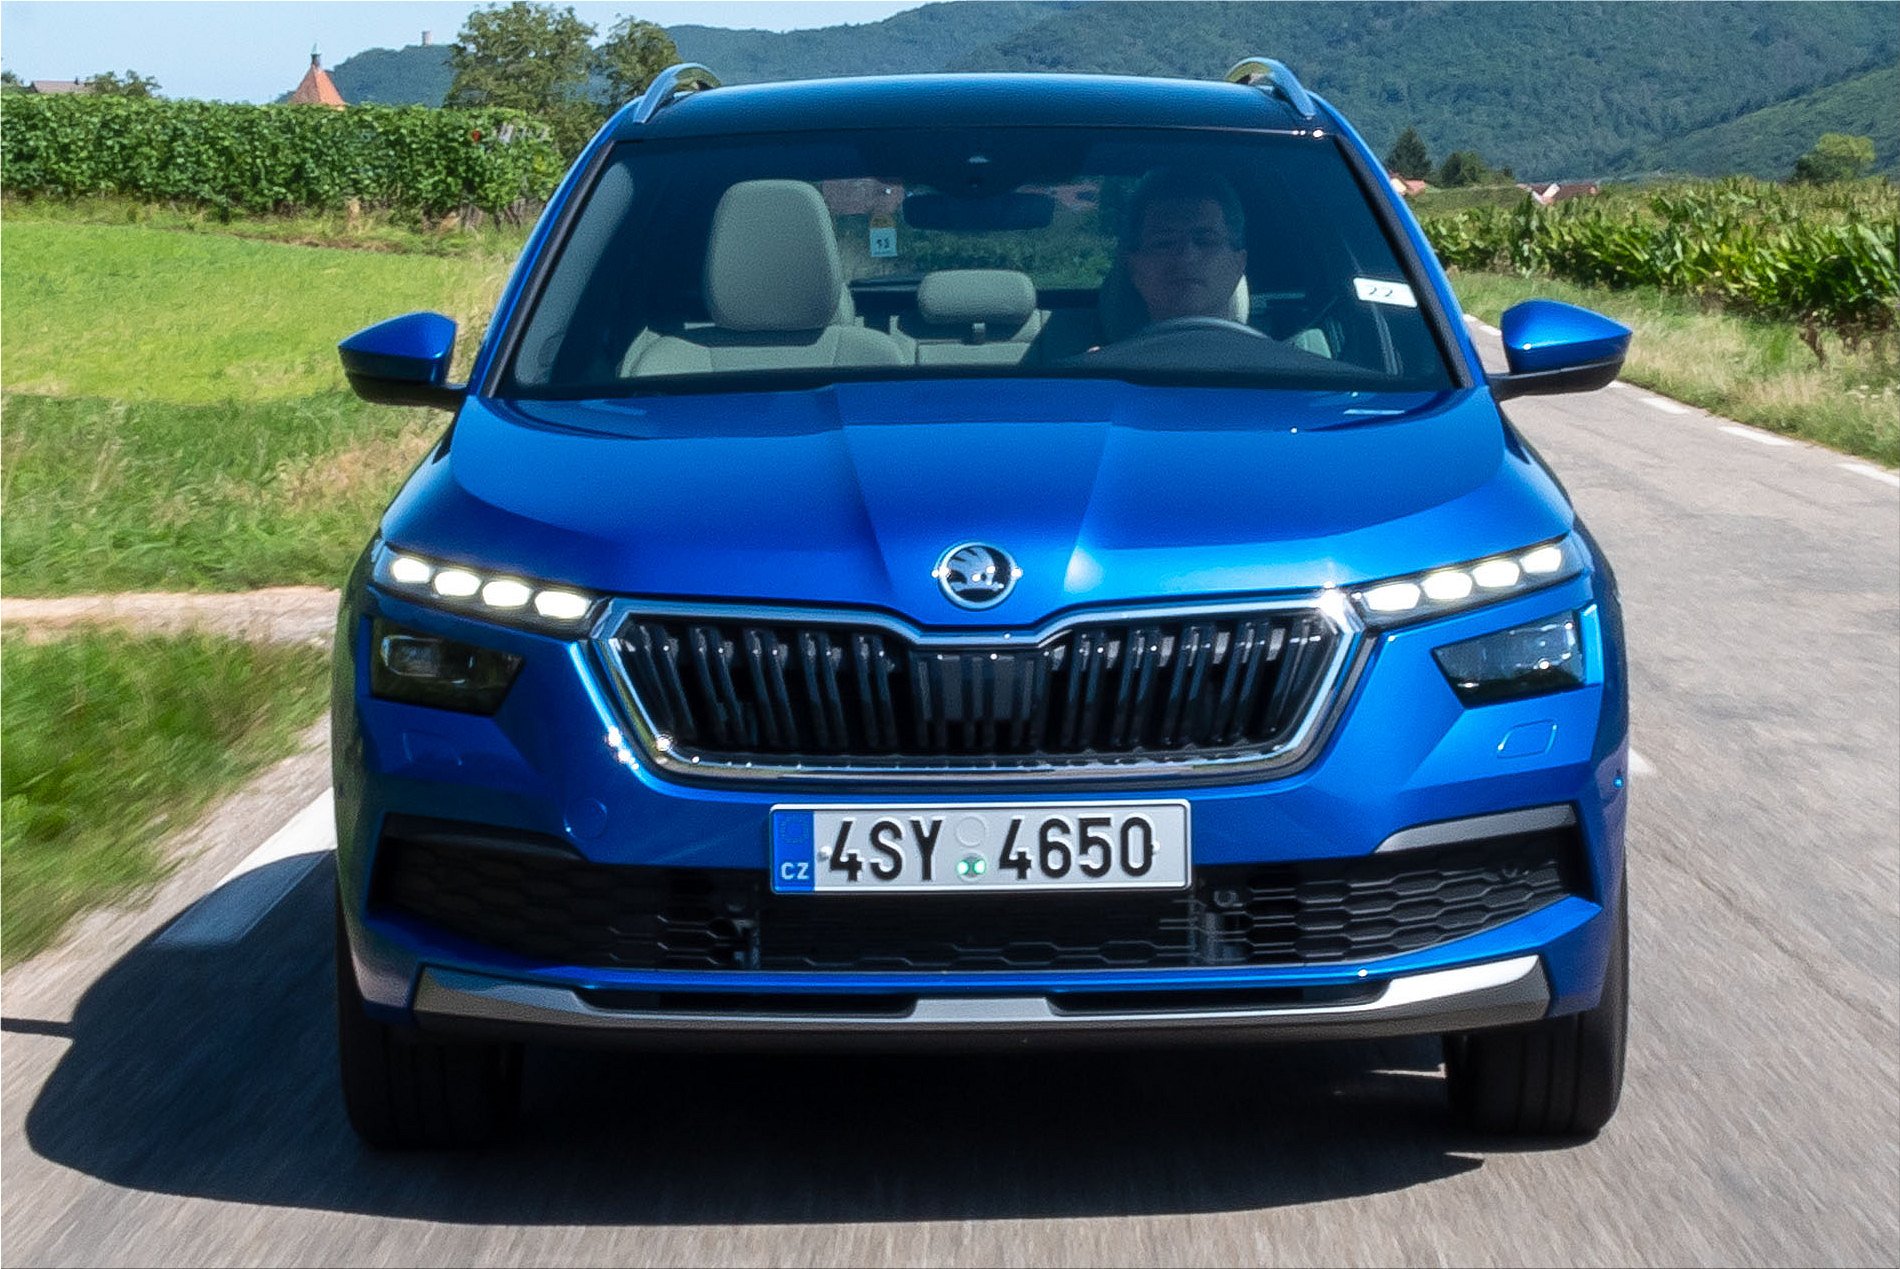 SKODA KAMIQ feiert Bestellstart: neues City-SUV ab 17.950 Euro